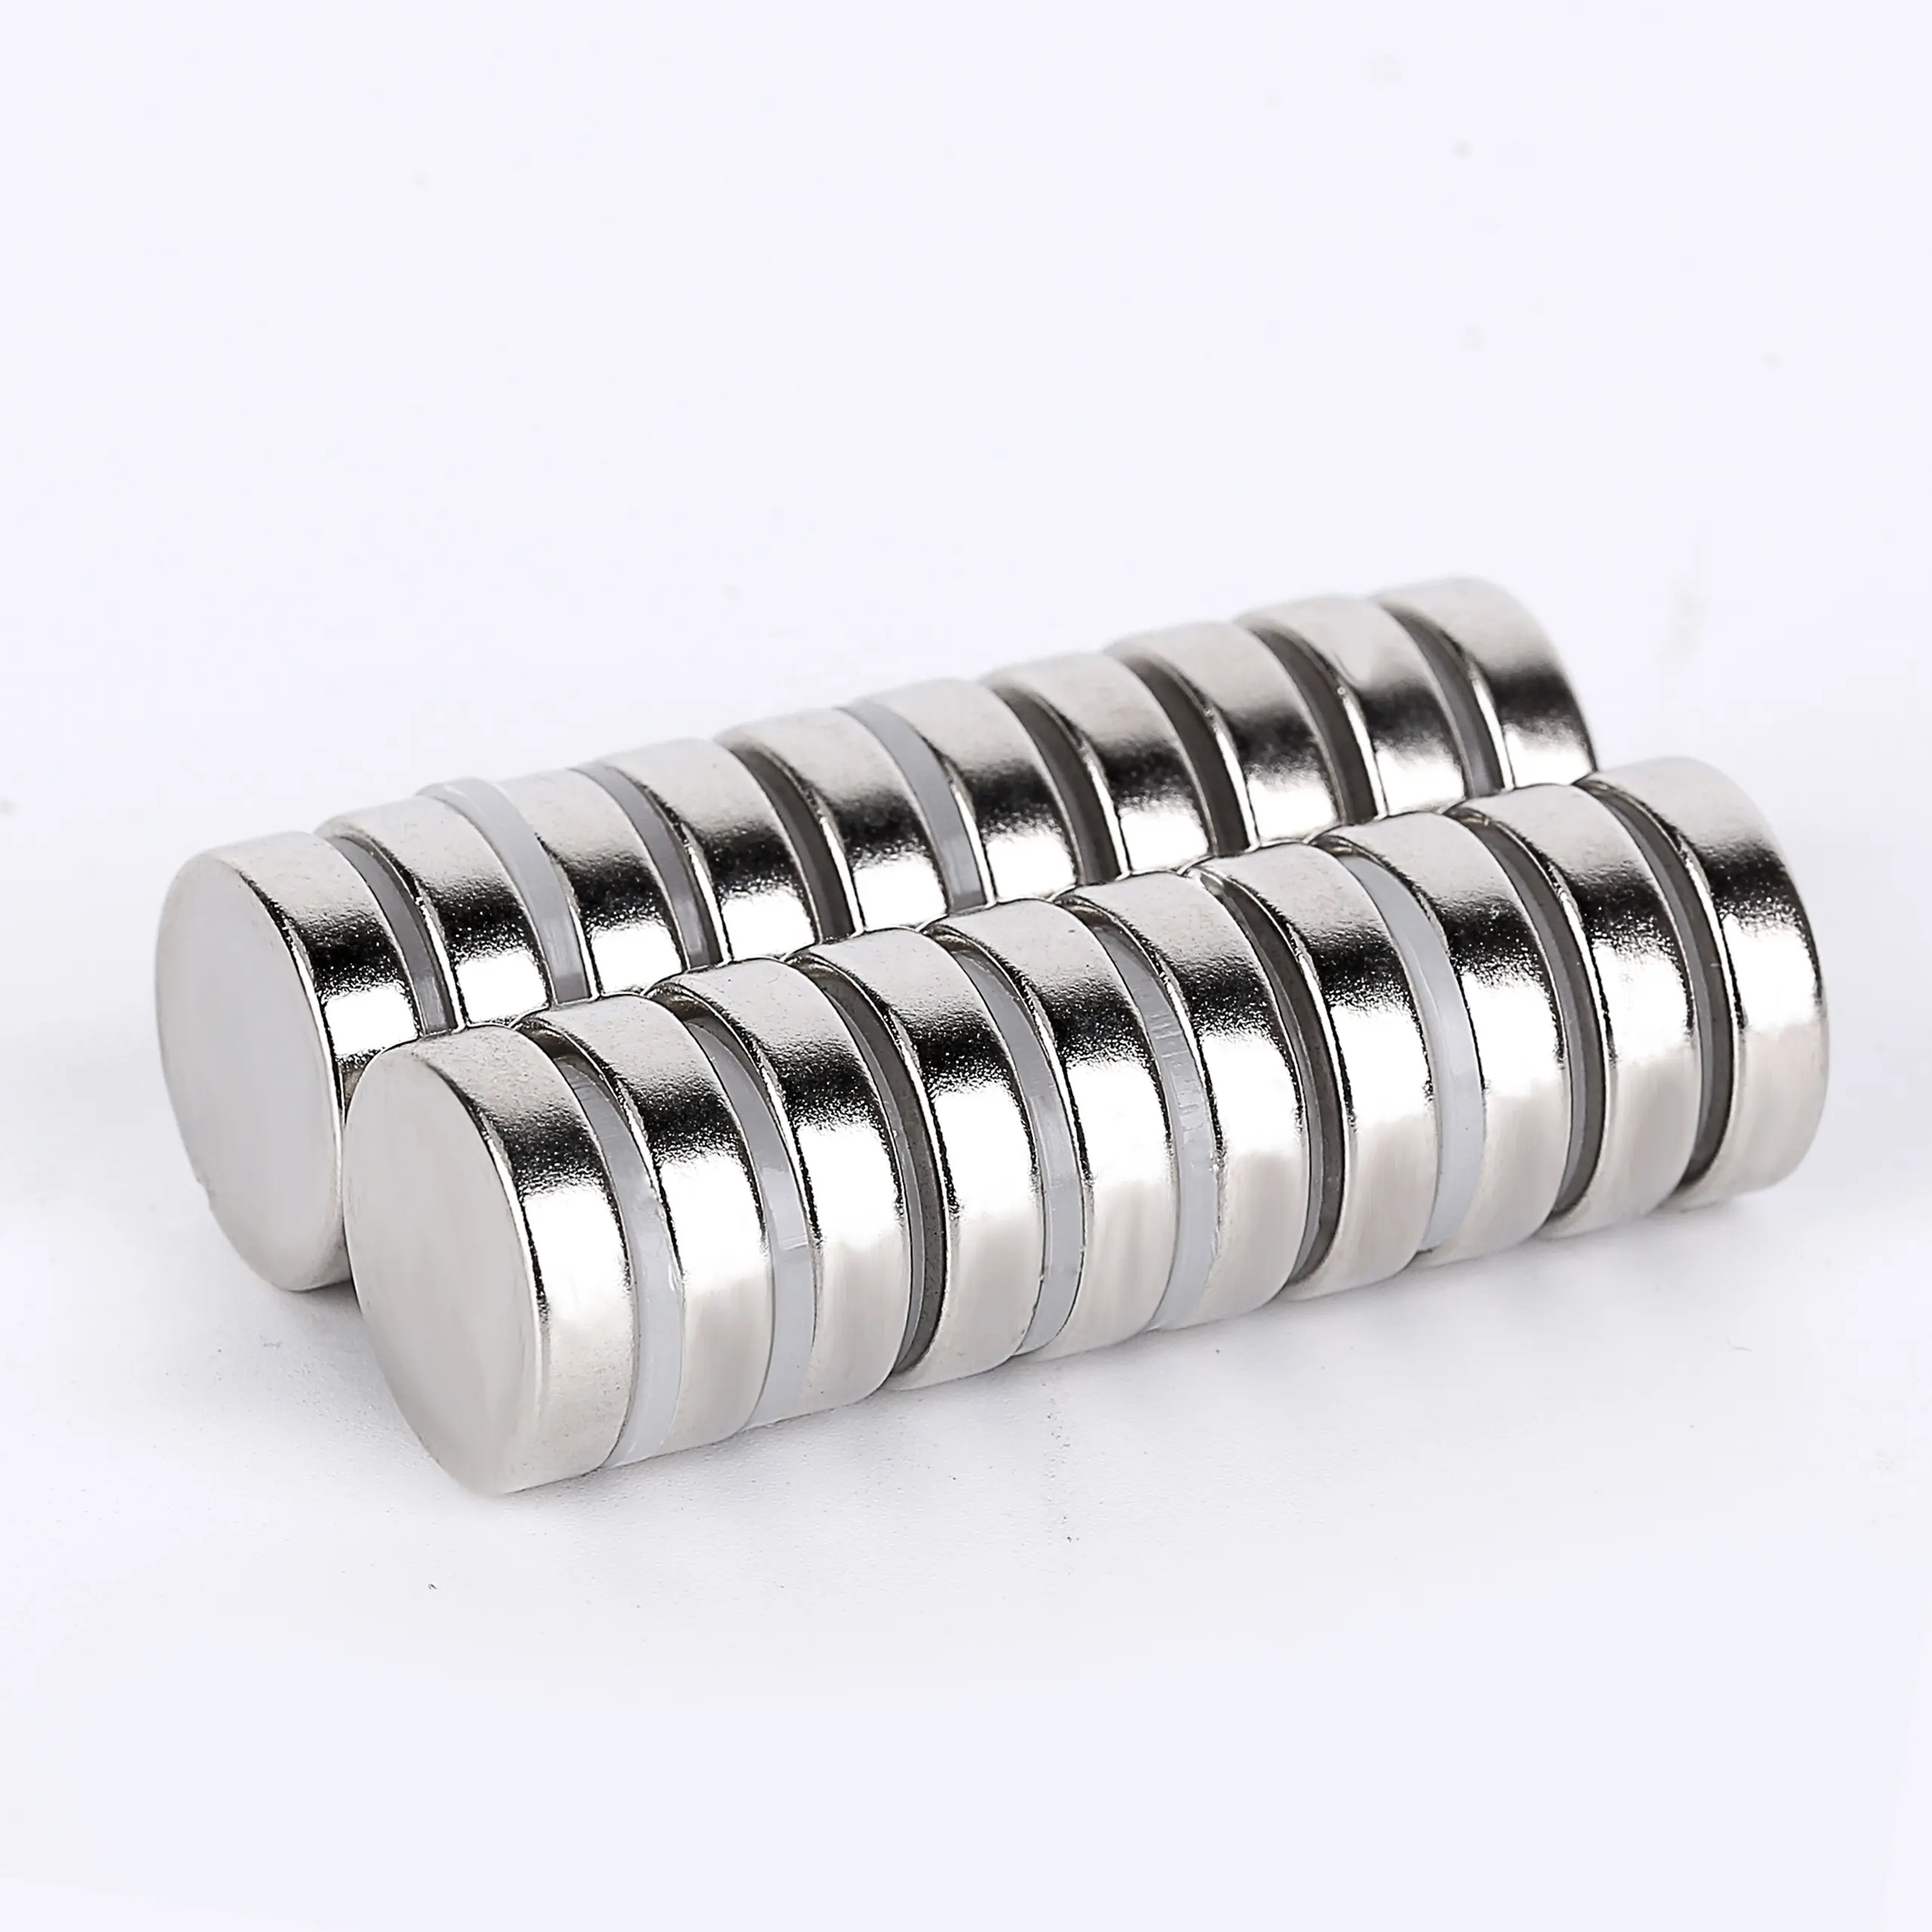 N52 galvanized cylindrical perforated neodymium iron boron magnet powerful magnet